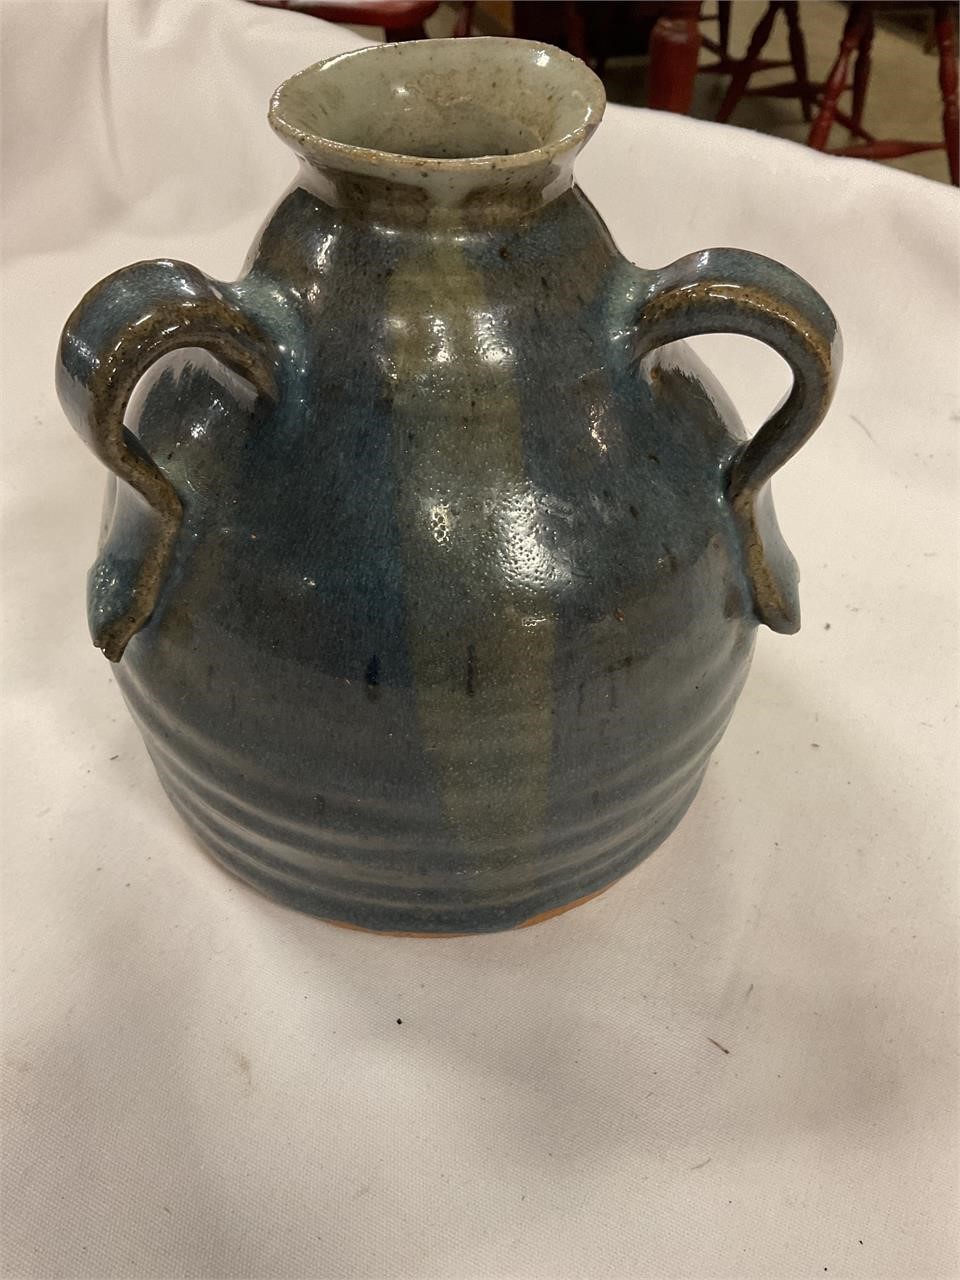 Three handled pottery jug